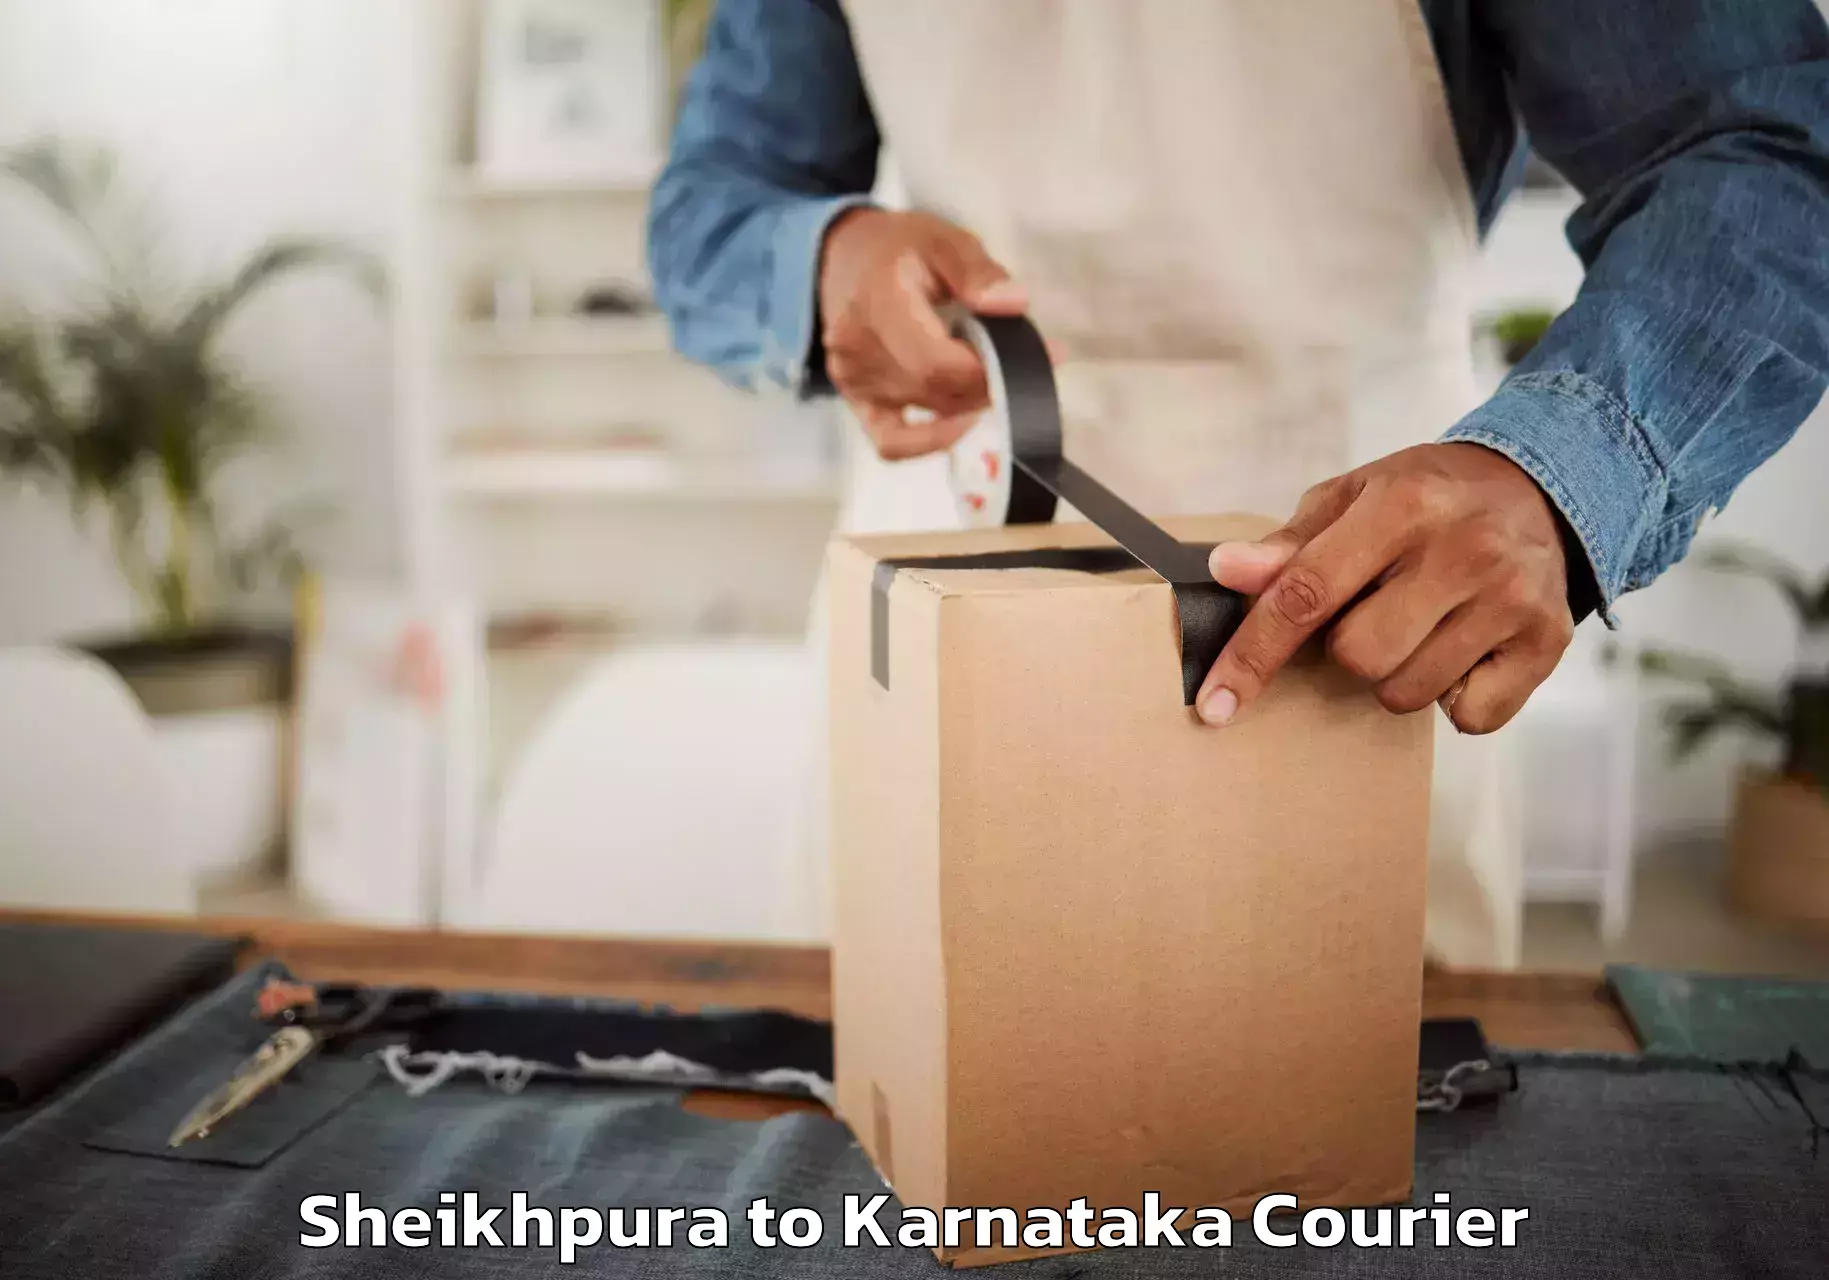 Furniture moving specialists Sheikhpura to Karnataka